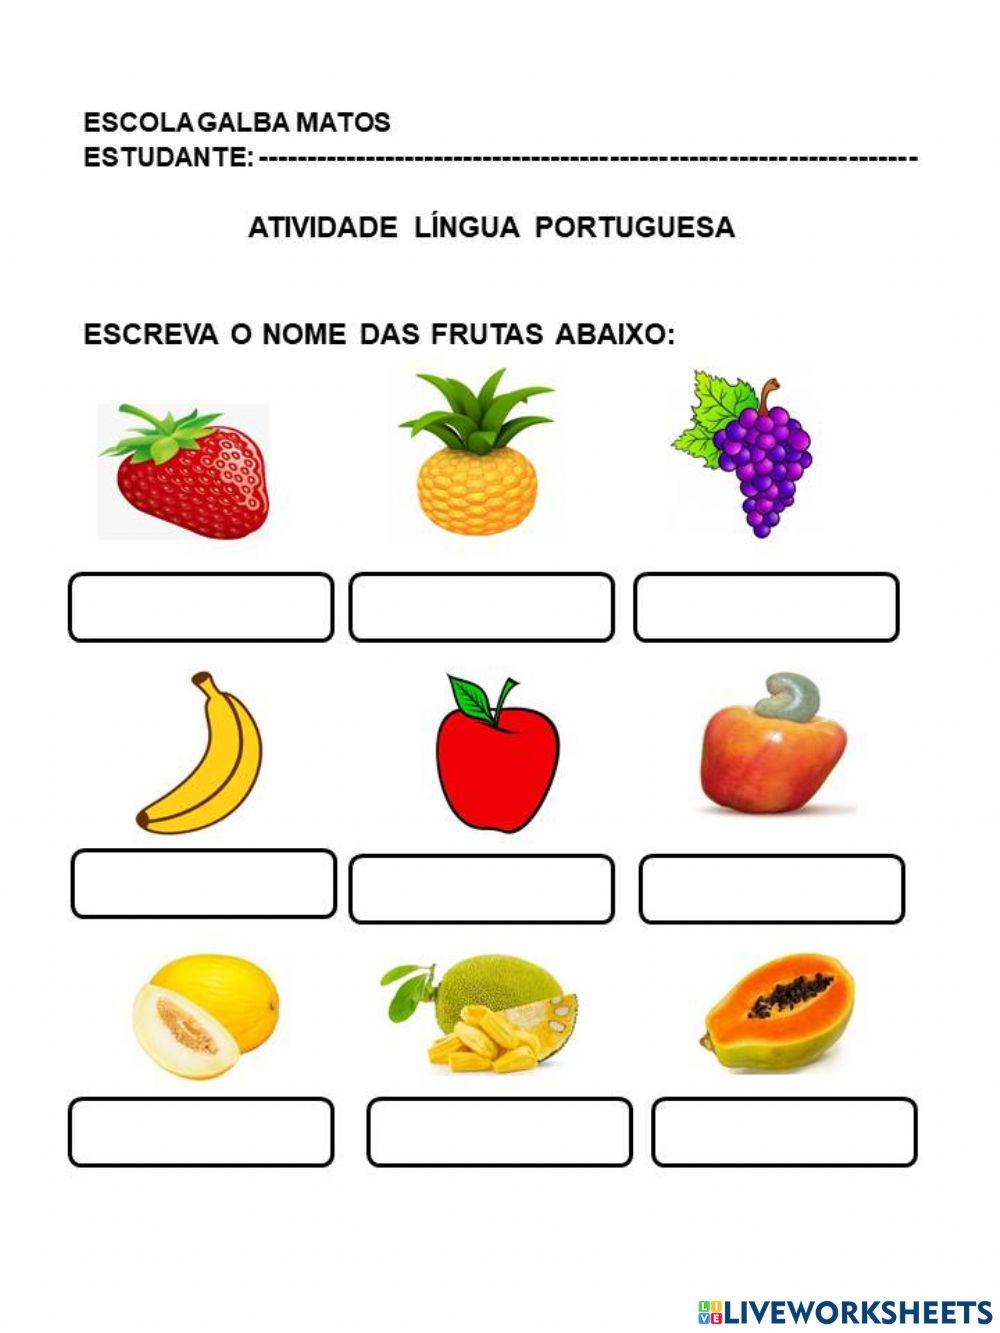 Nome das frutas